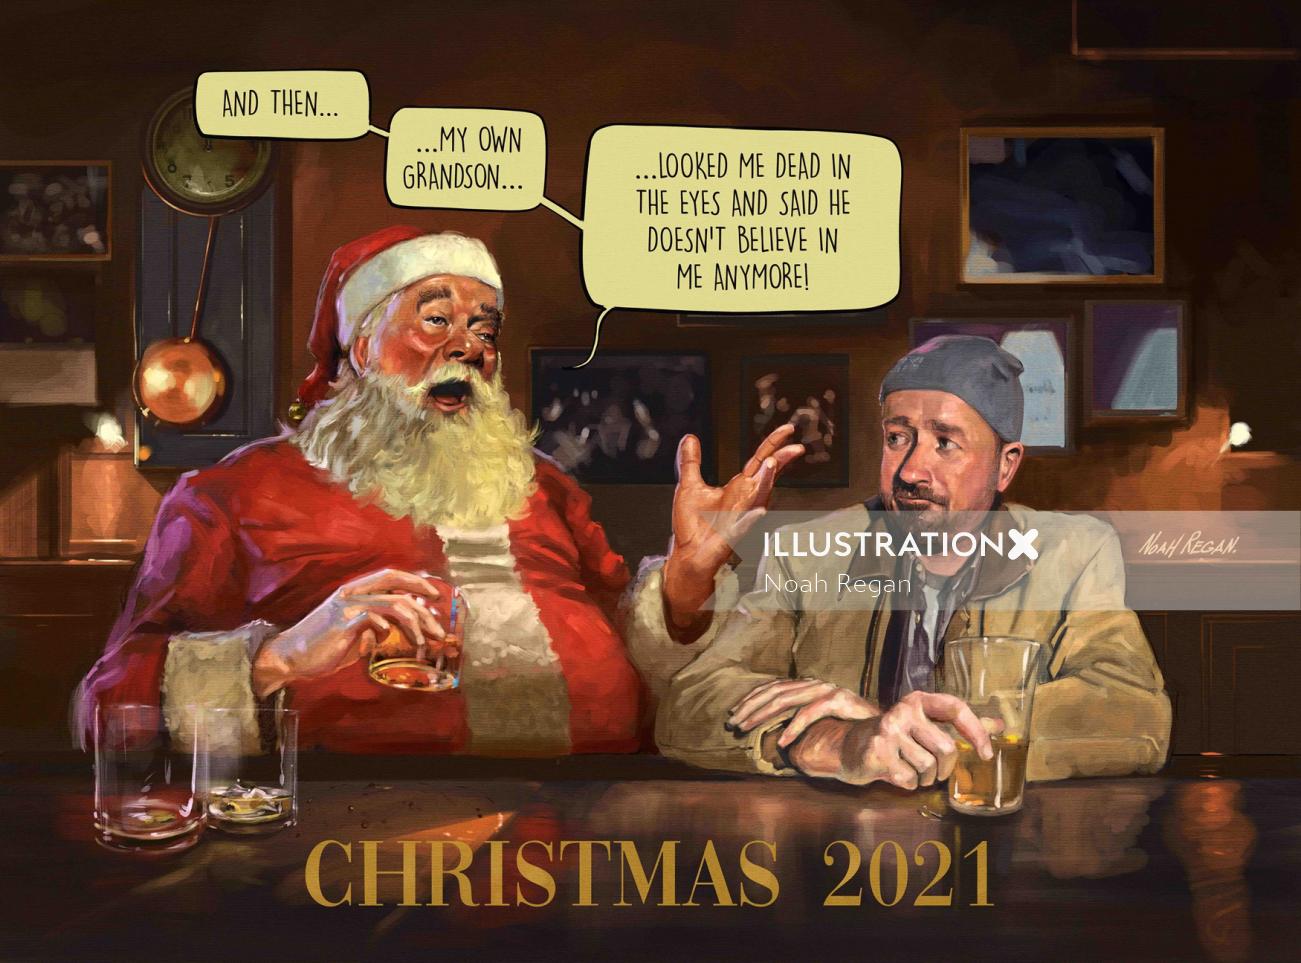 Noah Regan's 2021 best Christmas card illustration